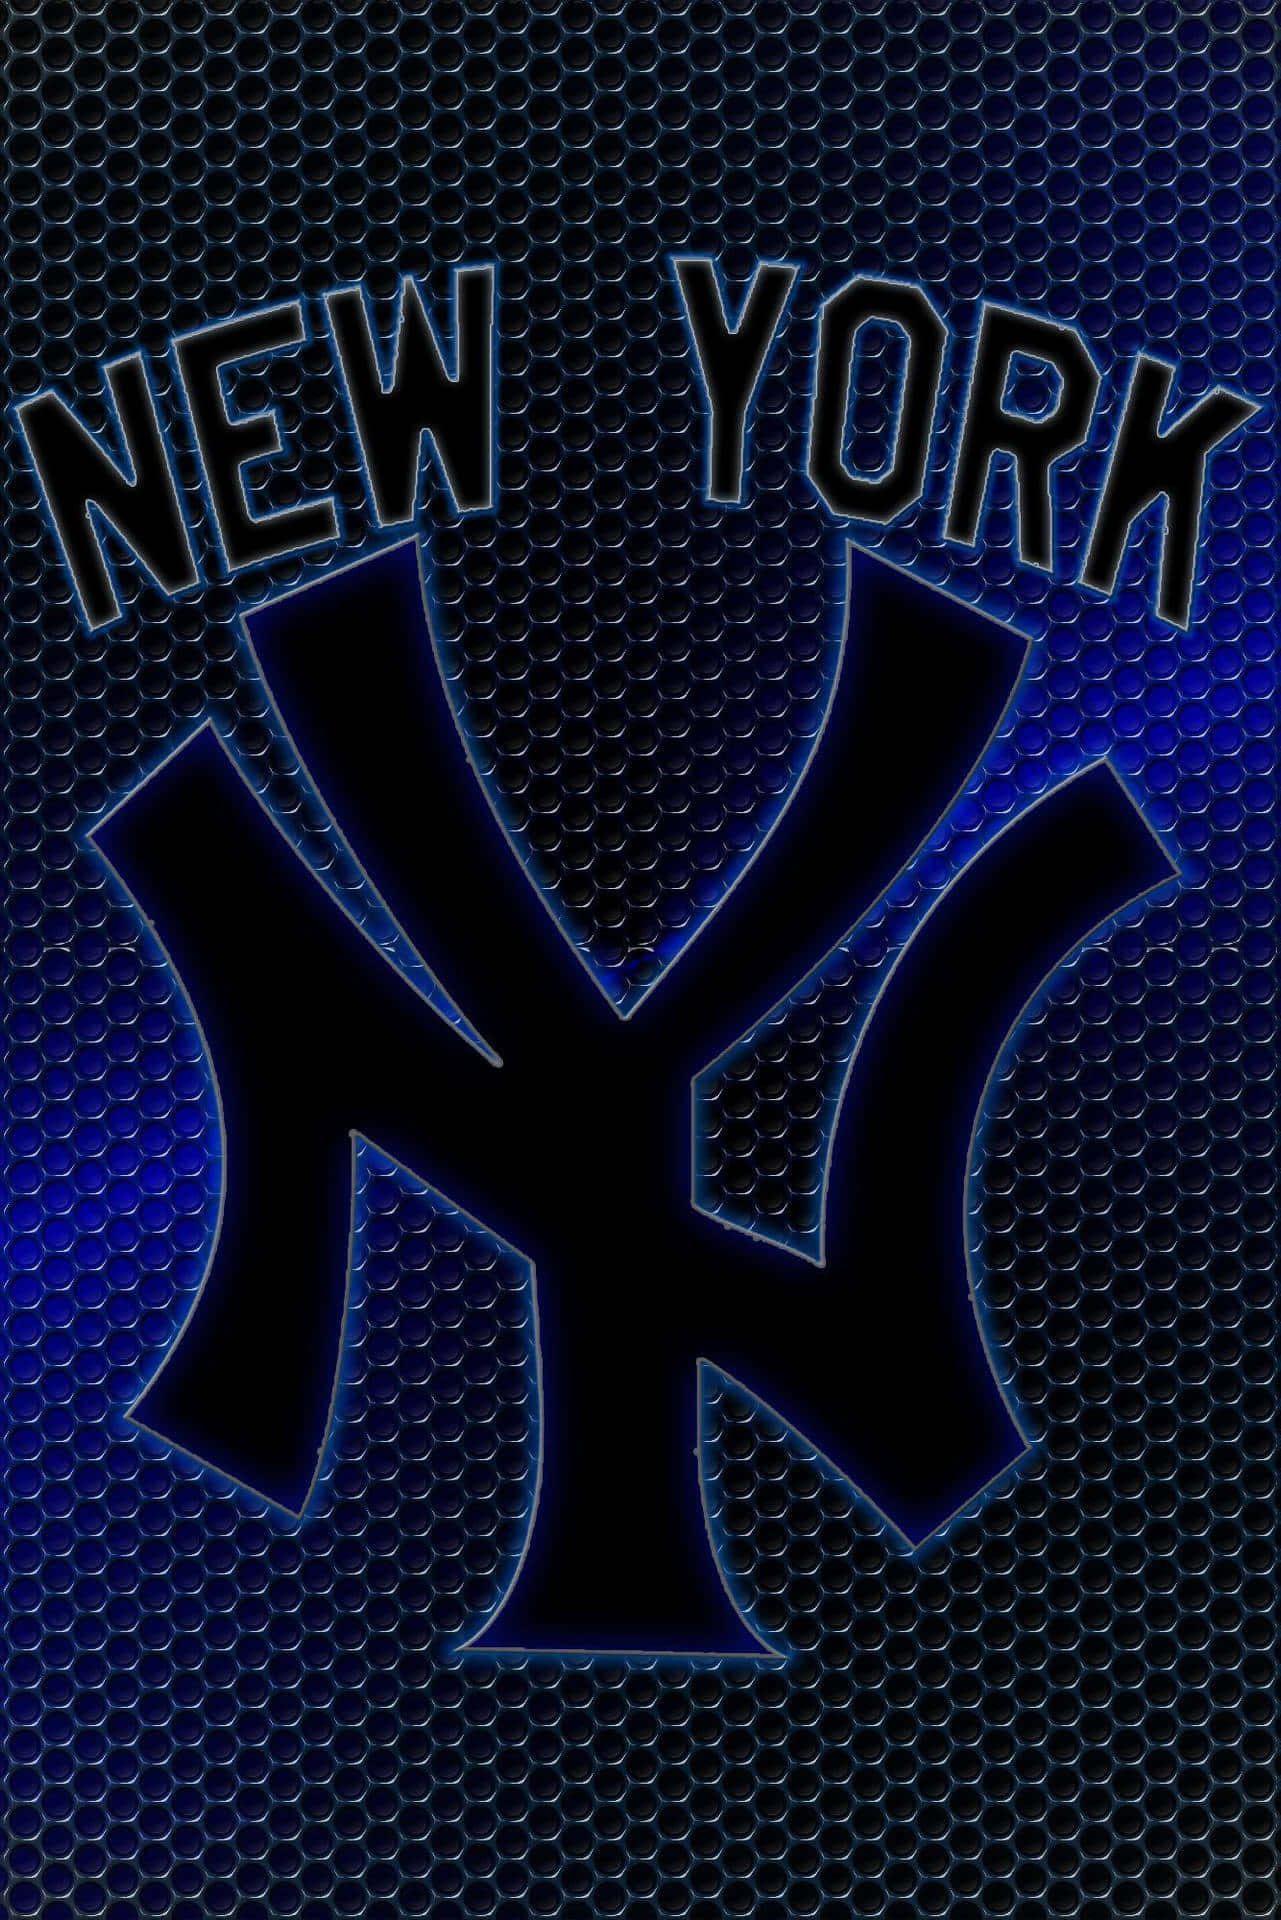 Sfondoscuro Blu Dei New York Yankees Per Iphone. Sfondo